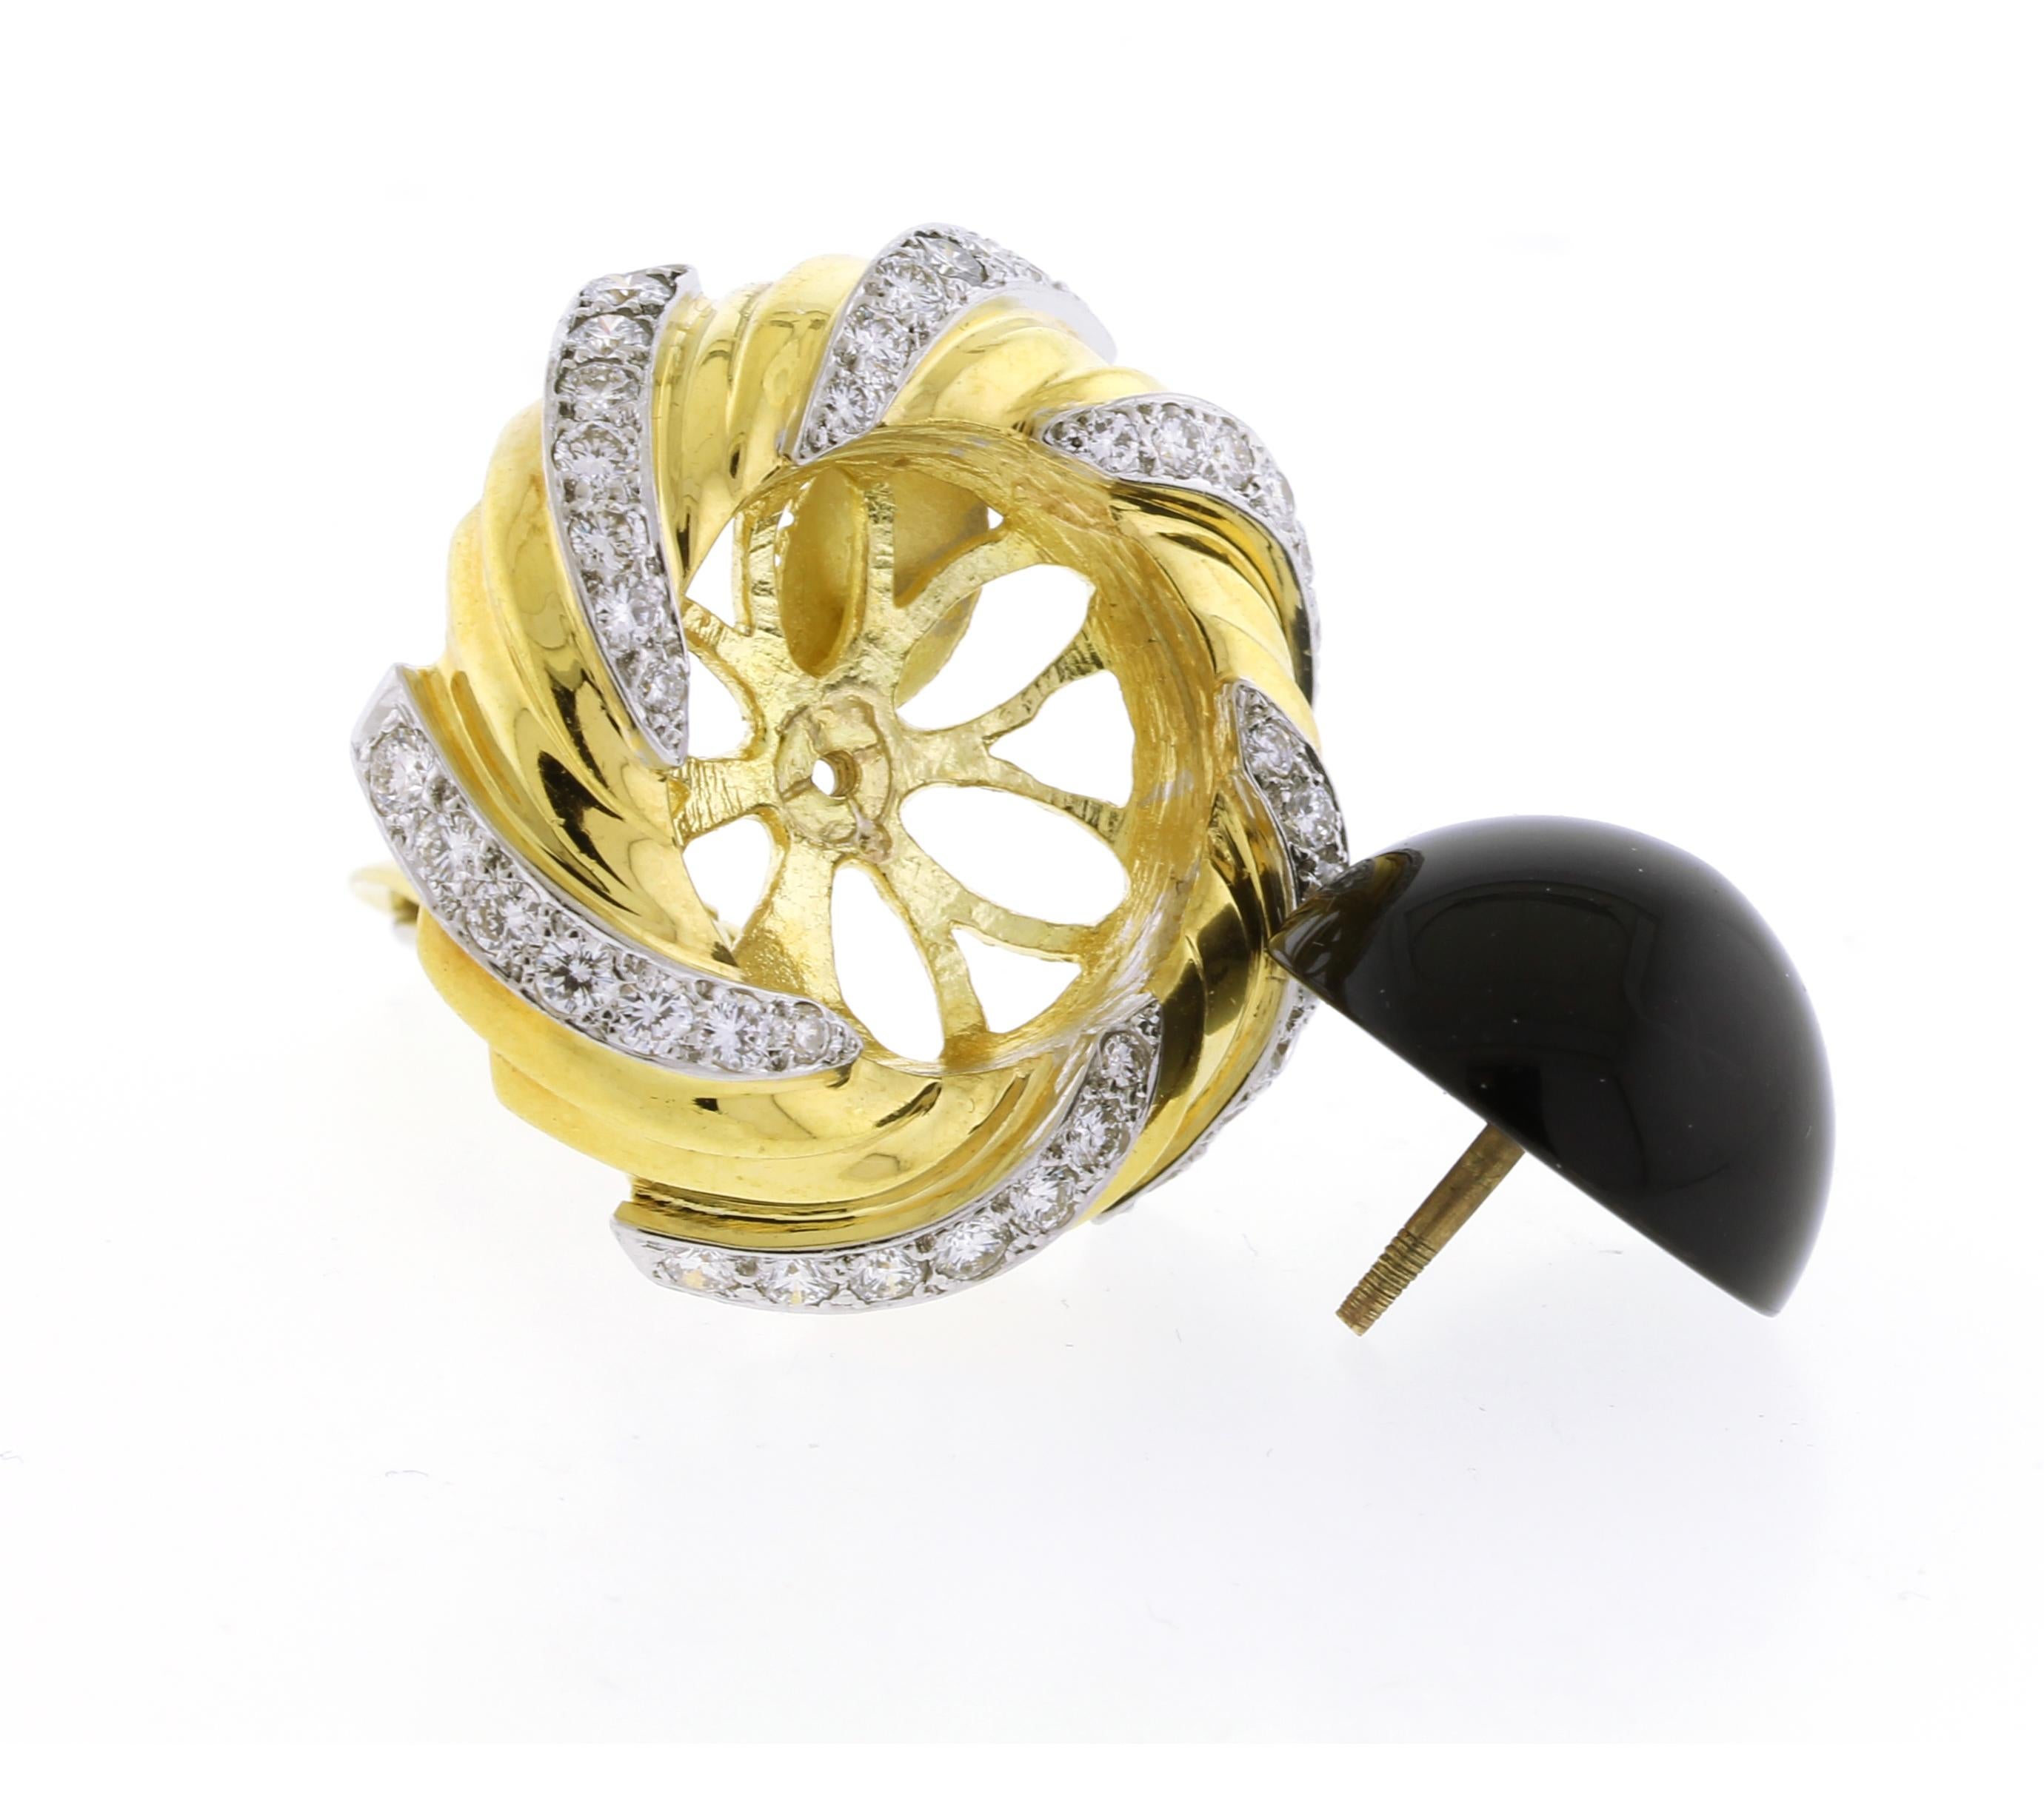 Brilliant Cut 18 Karat Gold and Diamond Earrings with Detachable Black Onyx Center